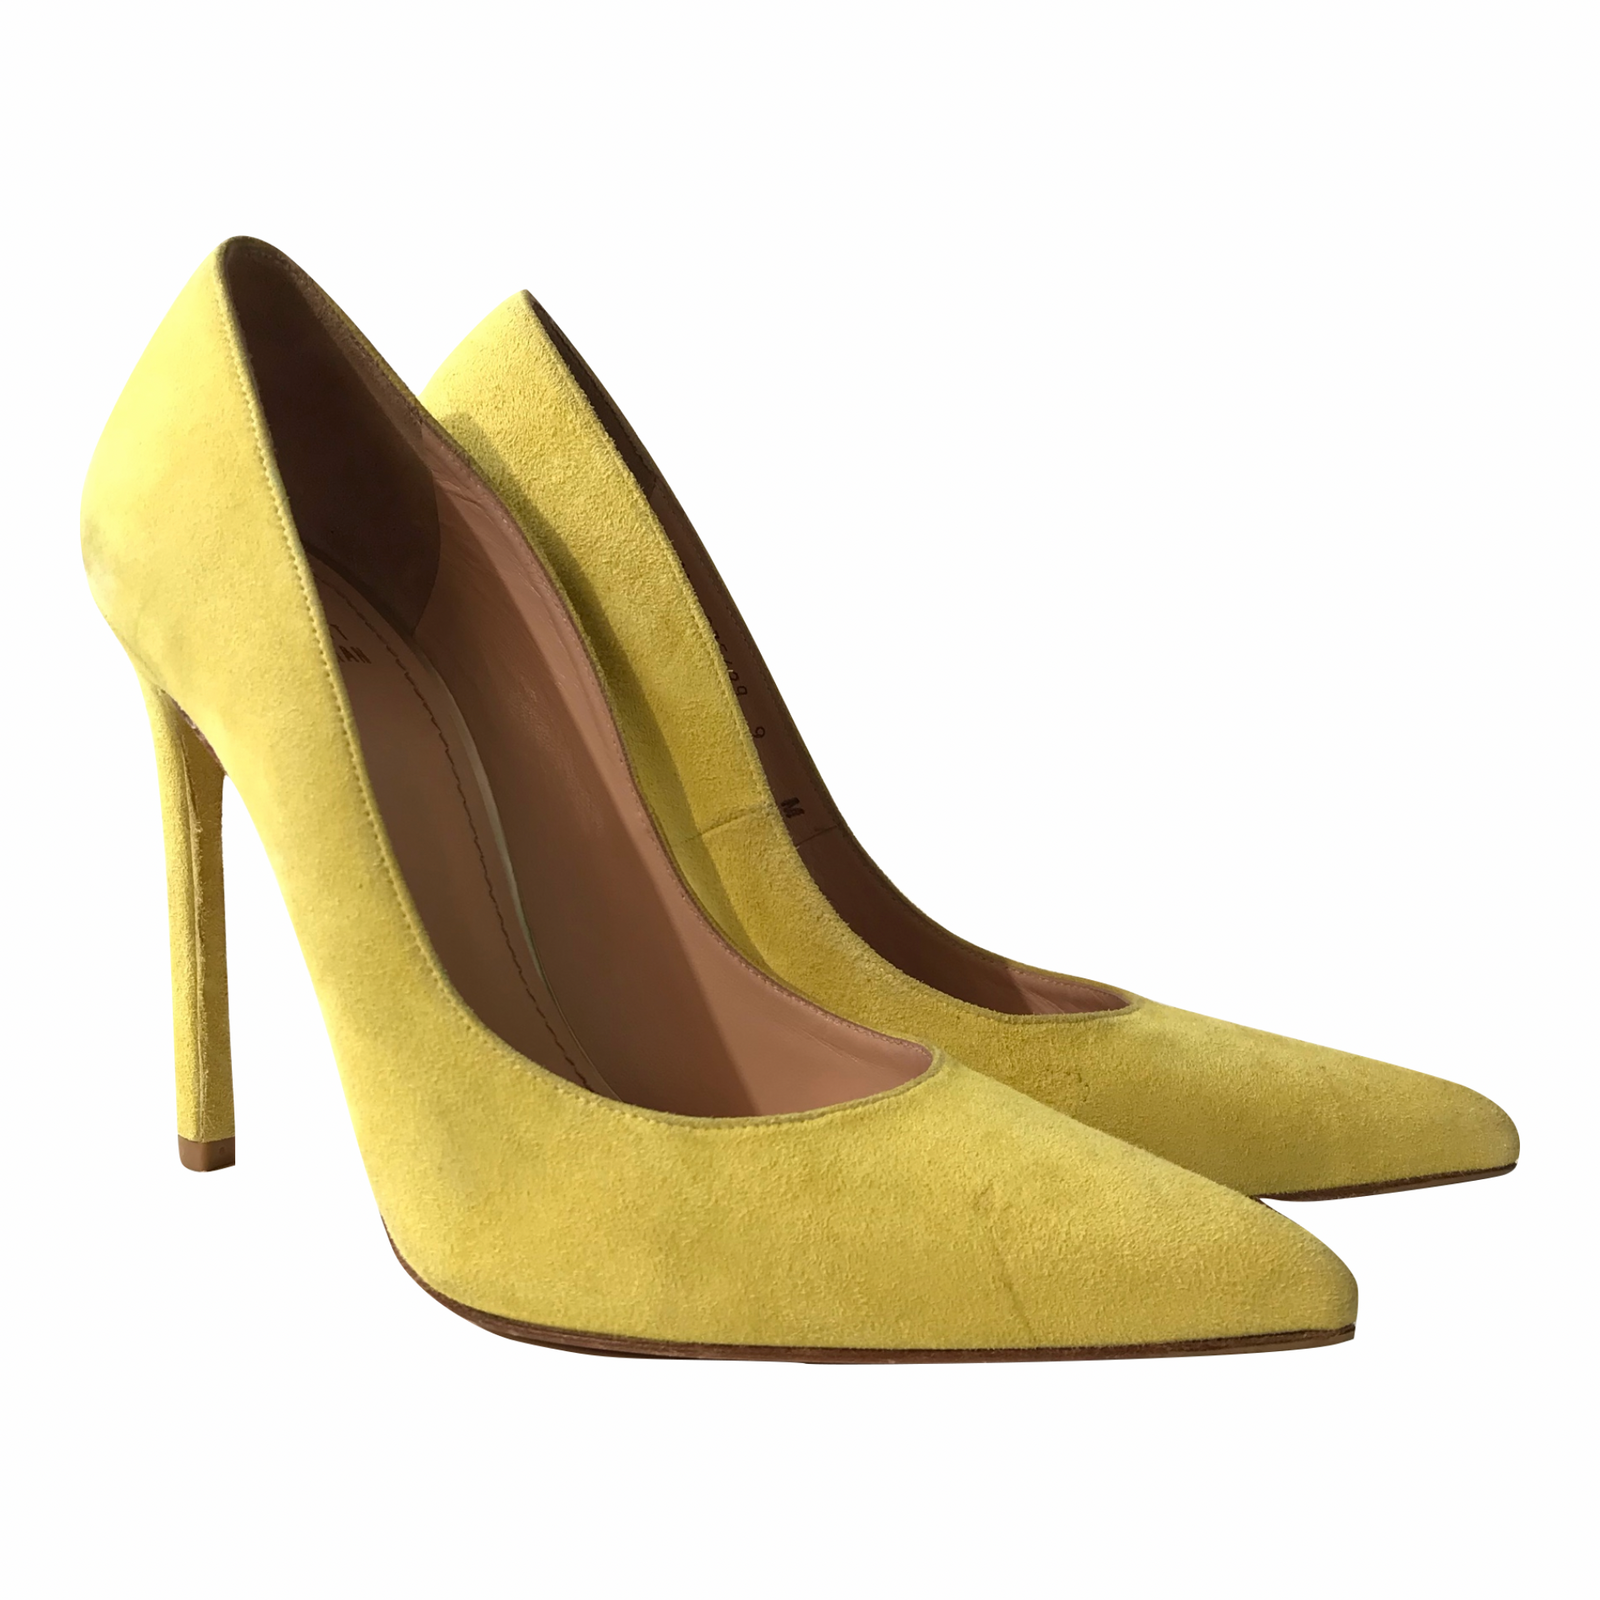 Lib Pointed Toe Stiletto Heels Patent Pumps - Lemon Yellow in Sexy Heels &  Platforms - $49.99